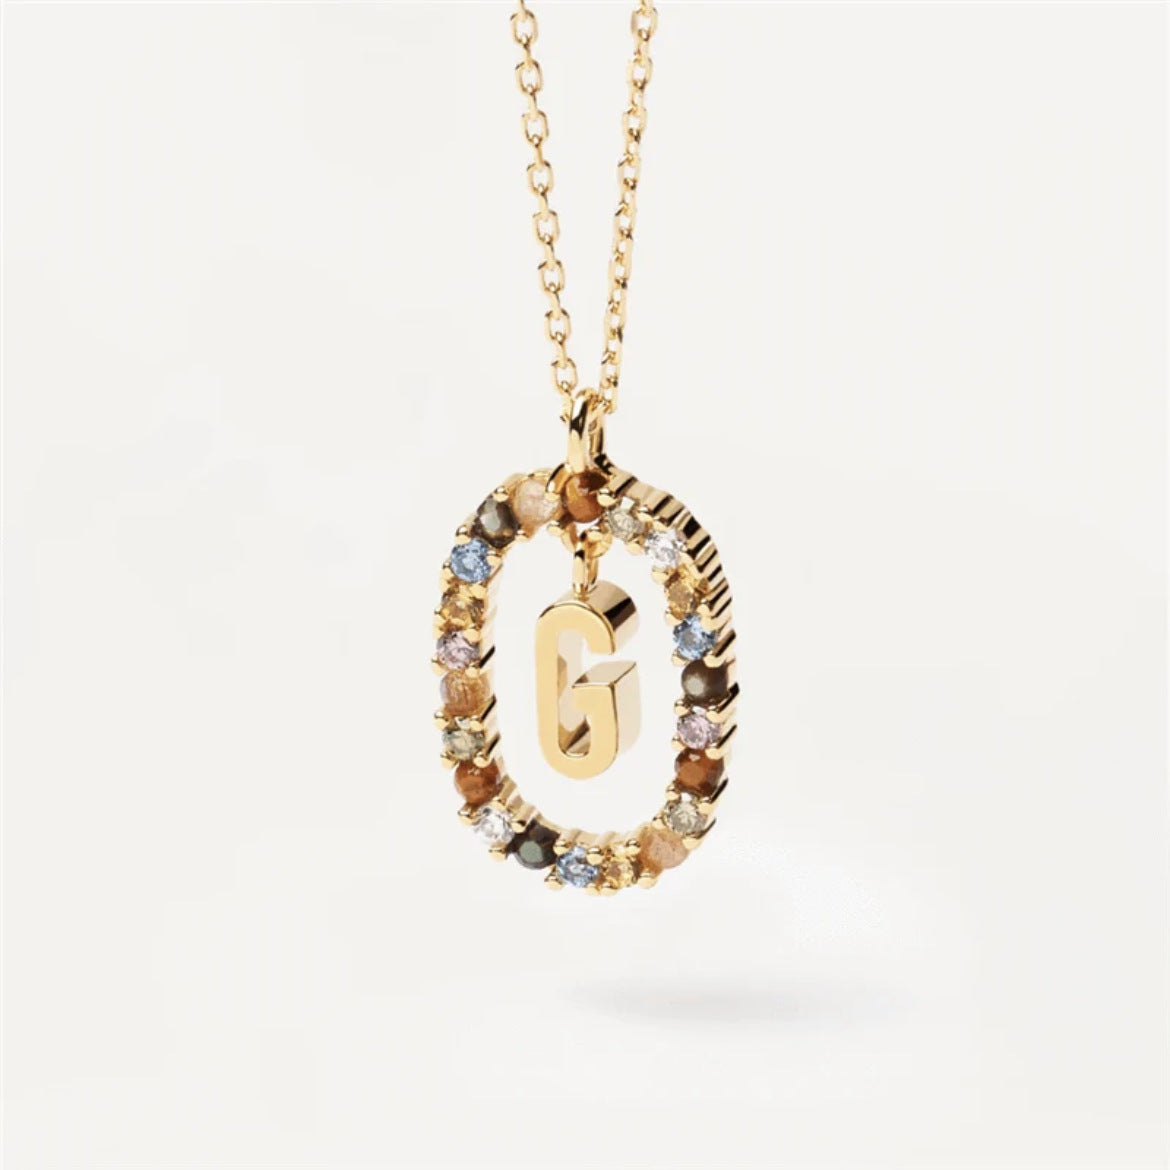 Colored Rhinestone Necklace 26 Alphabet Necklace 18K Fashion Jewelry